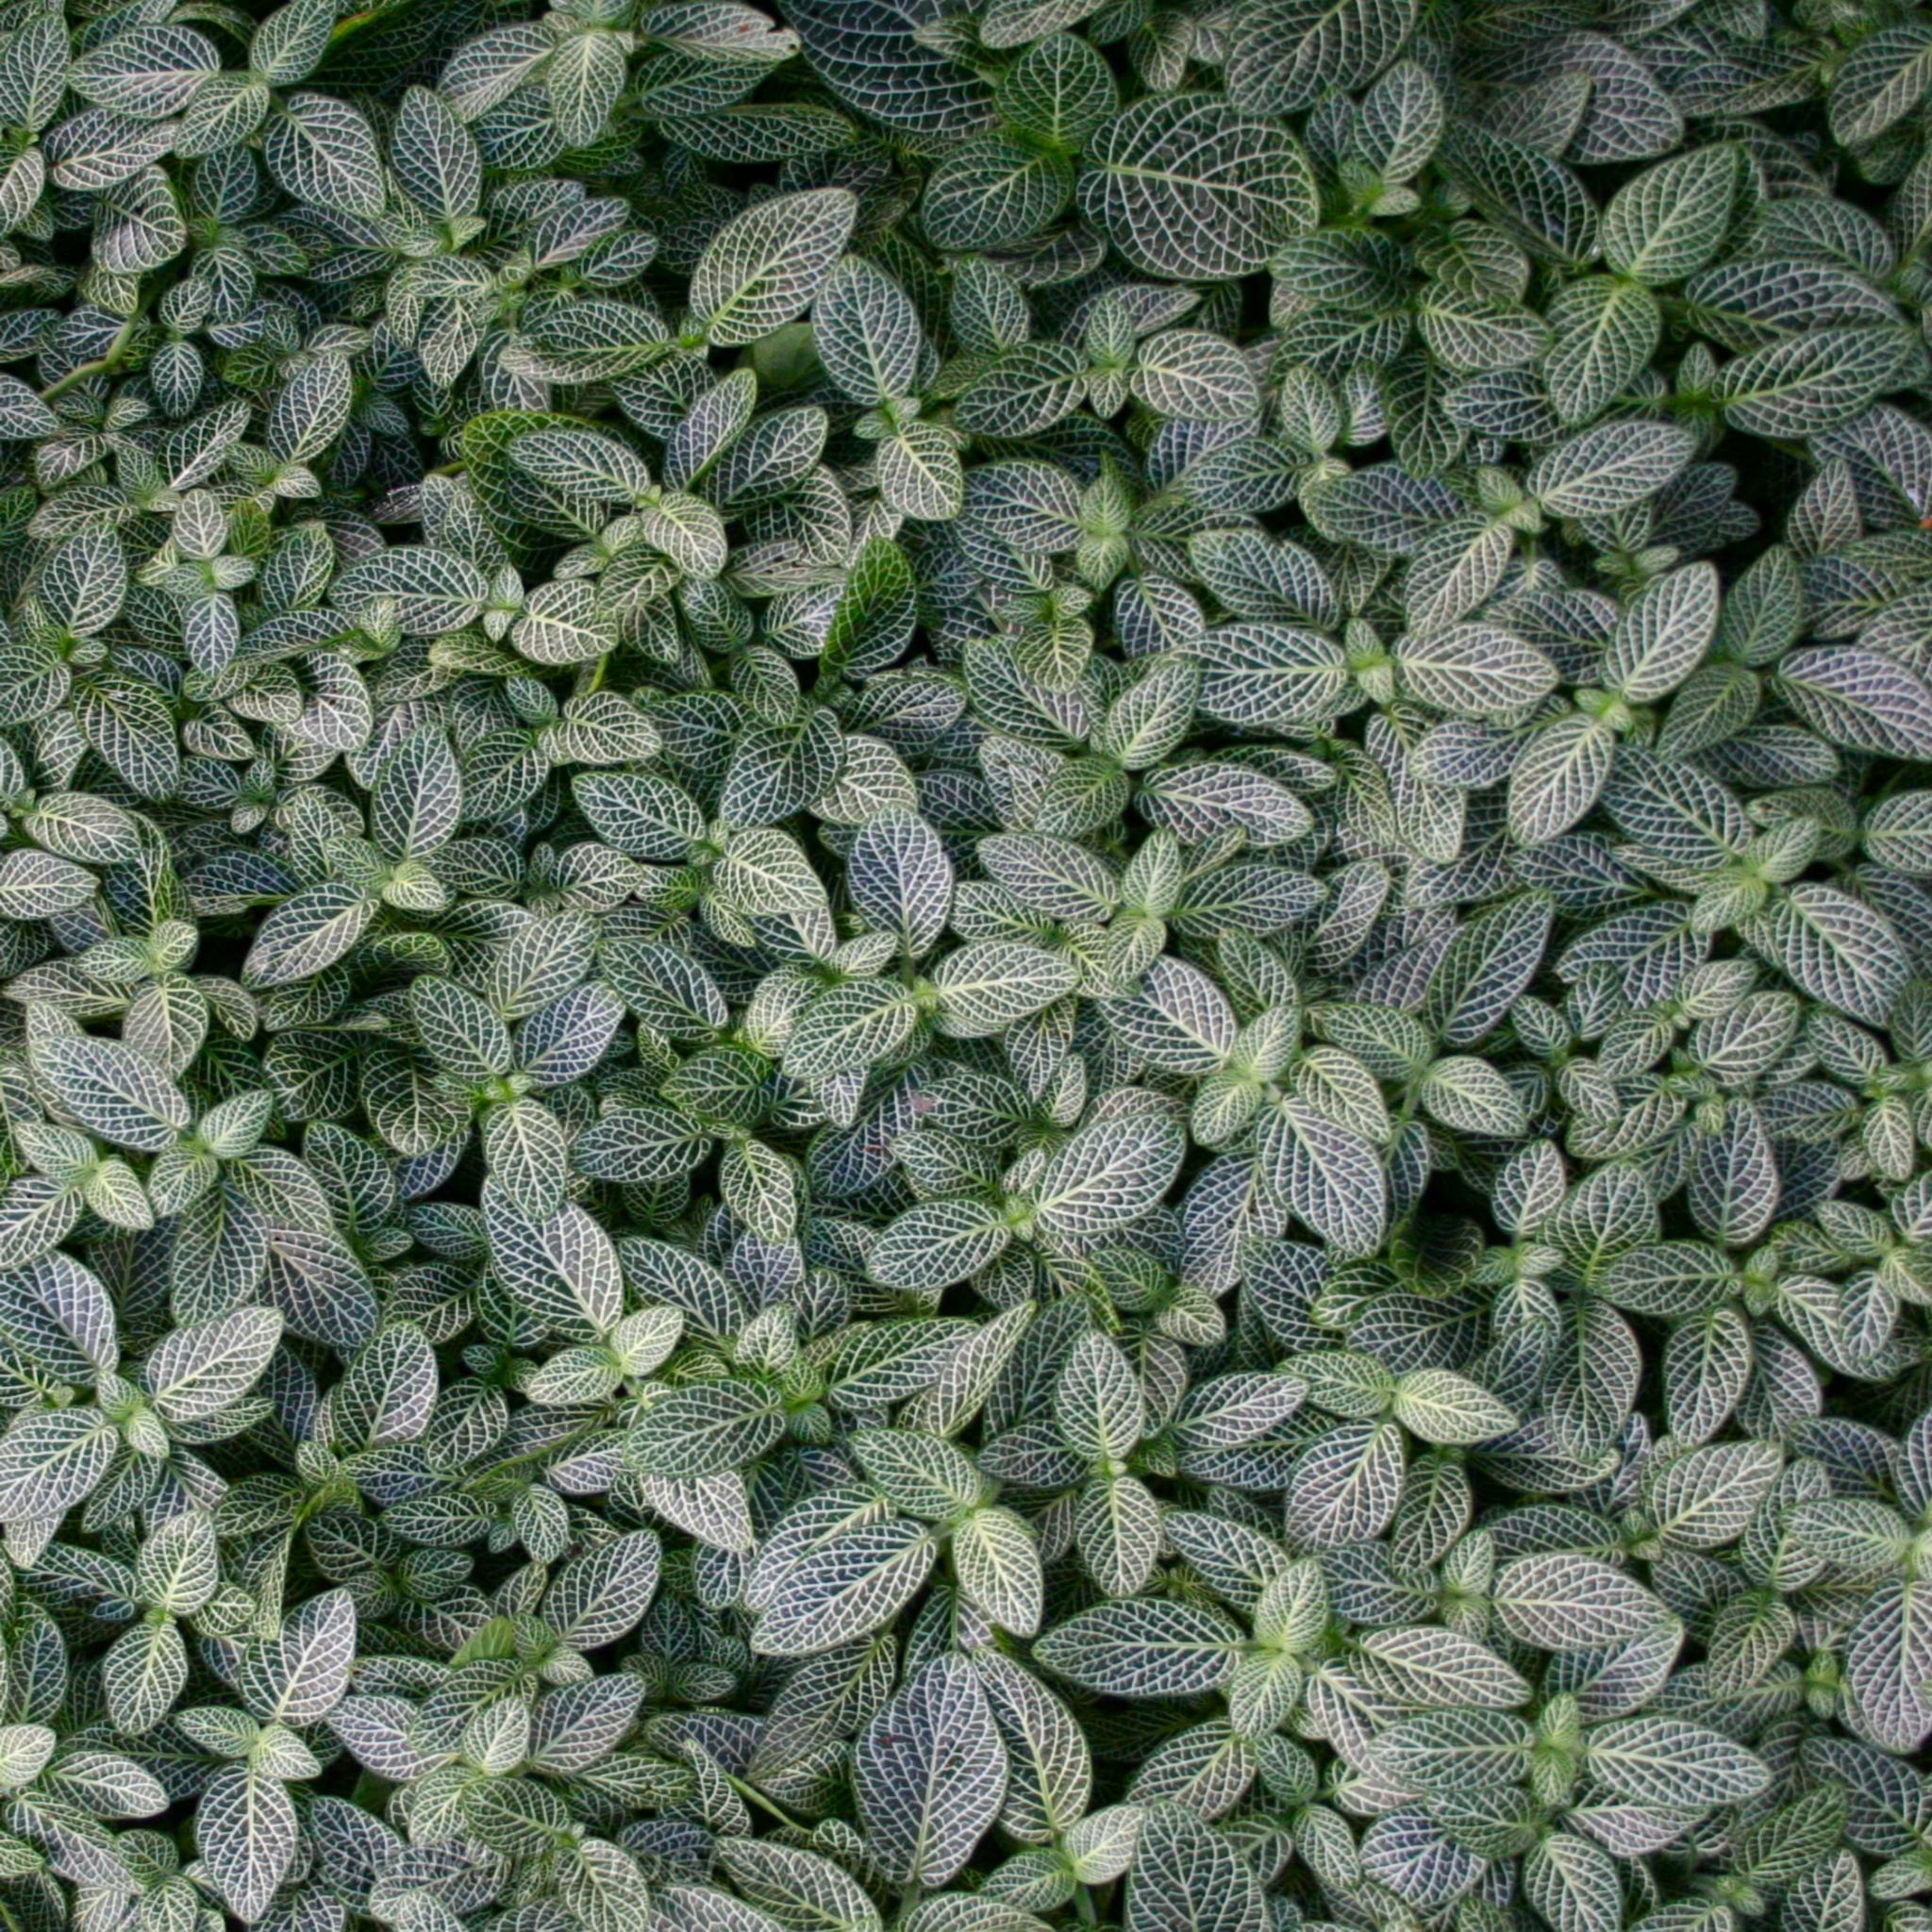 Ground leaf cover - Free desktop wallpapers